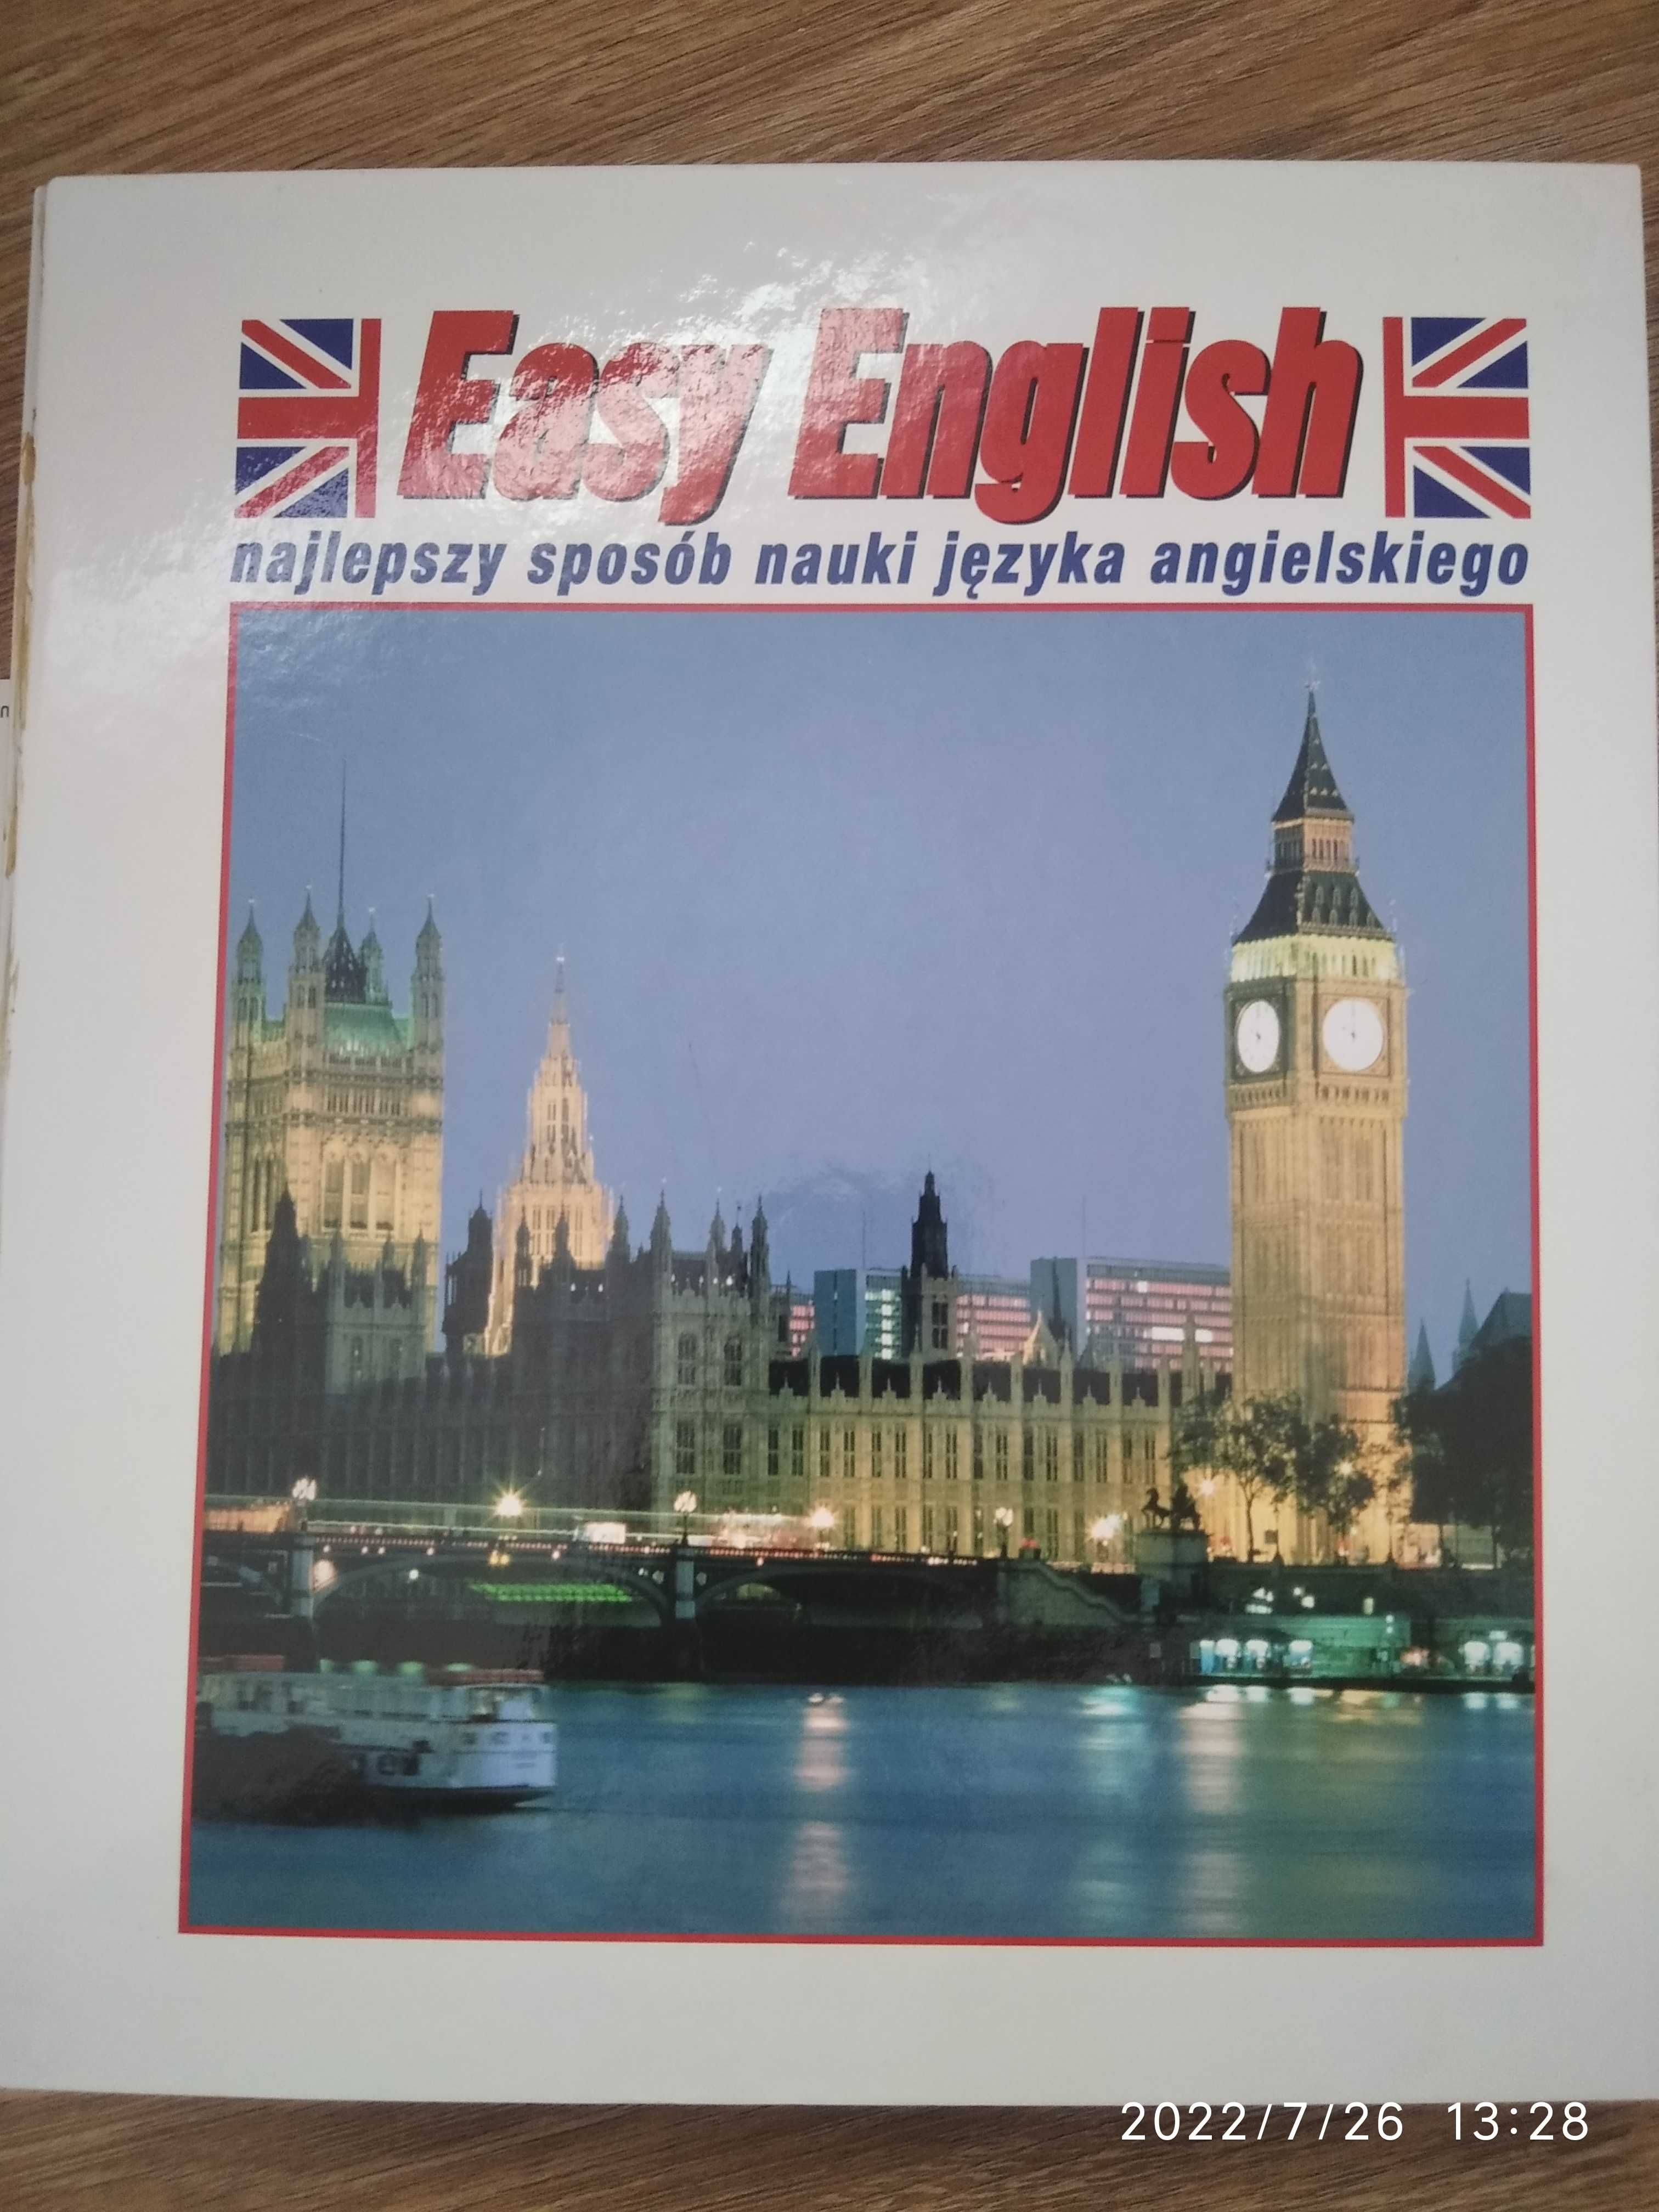 Easy English kultowe segregatory